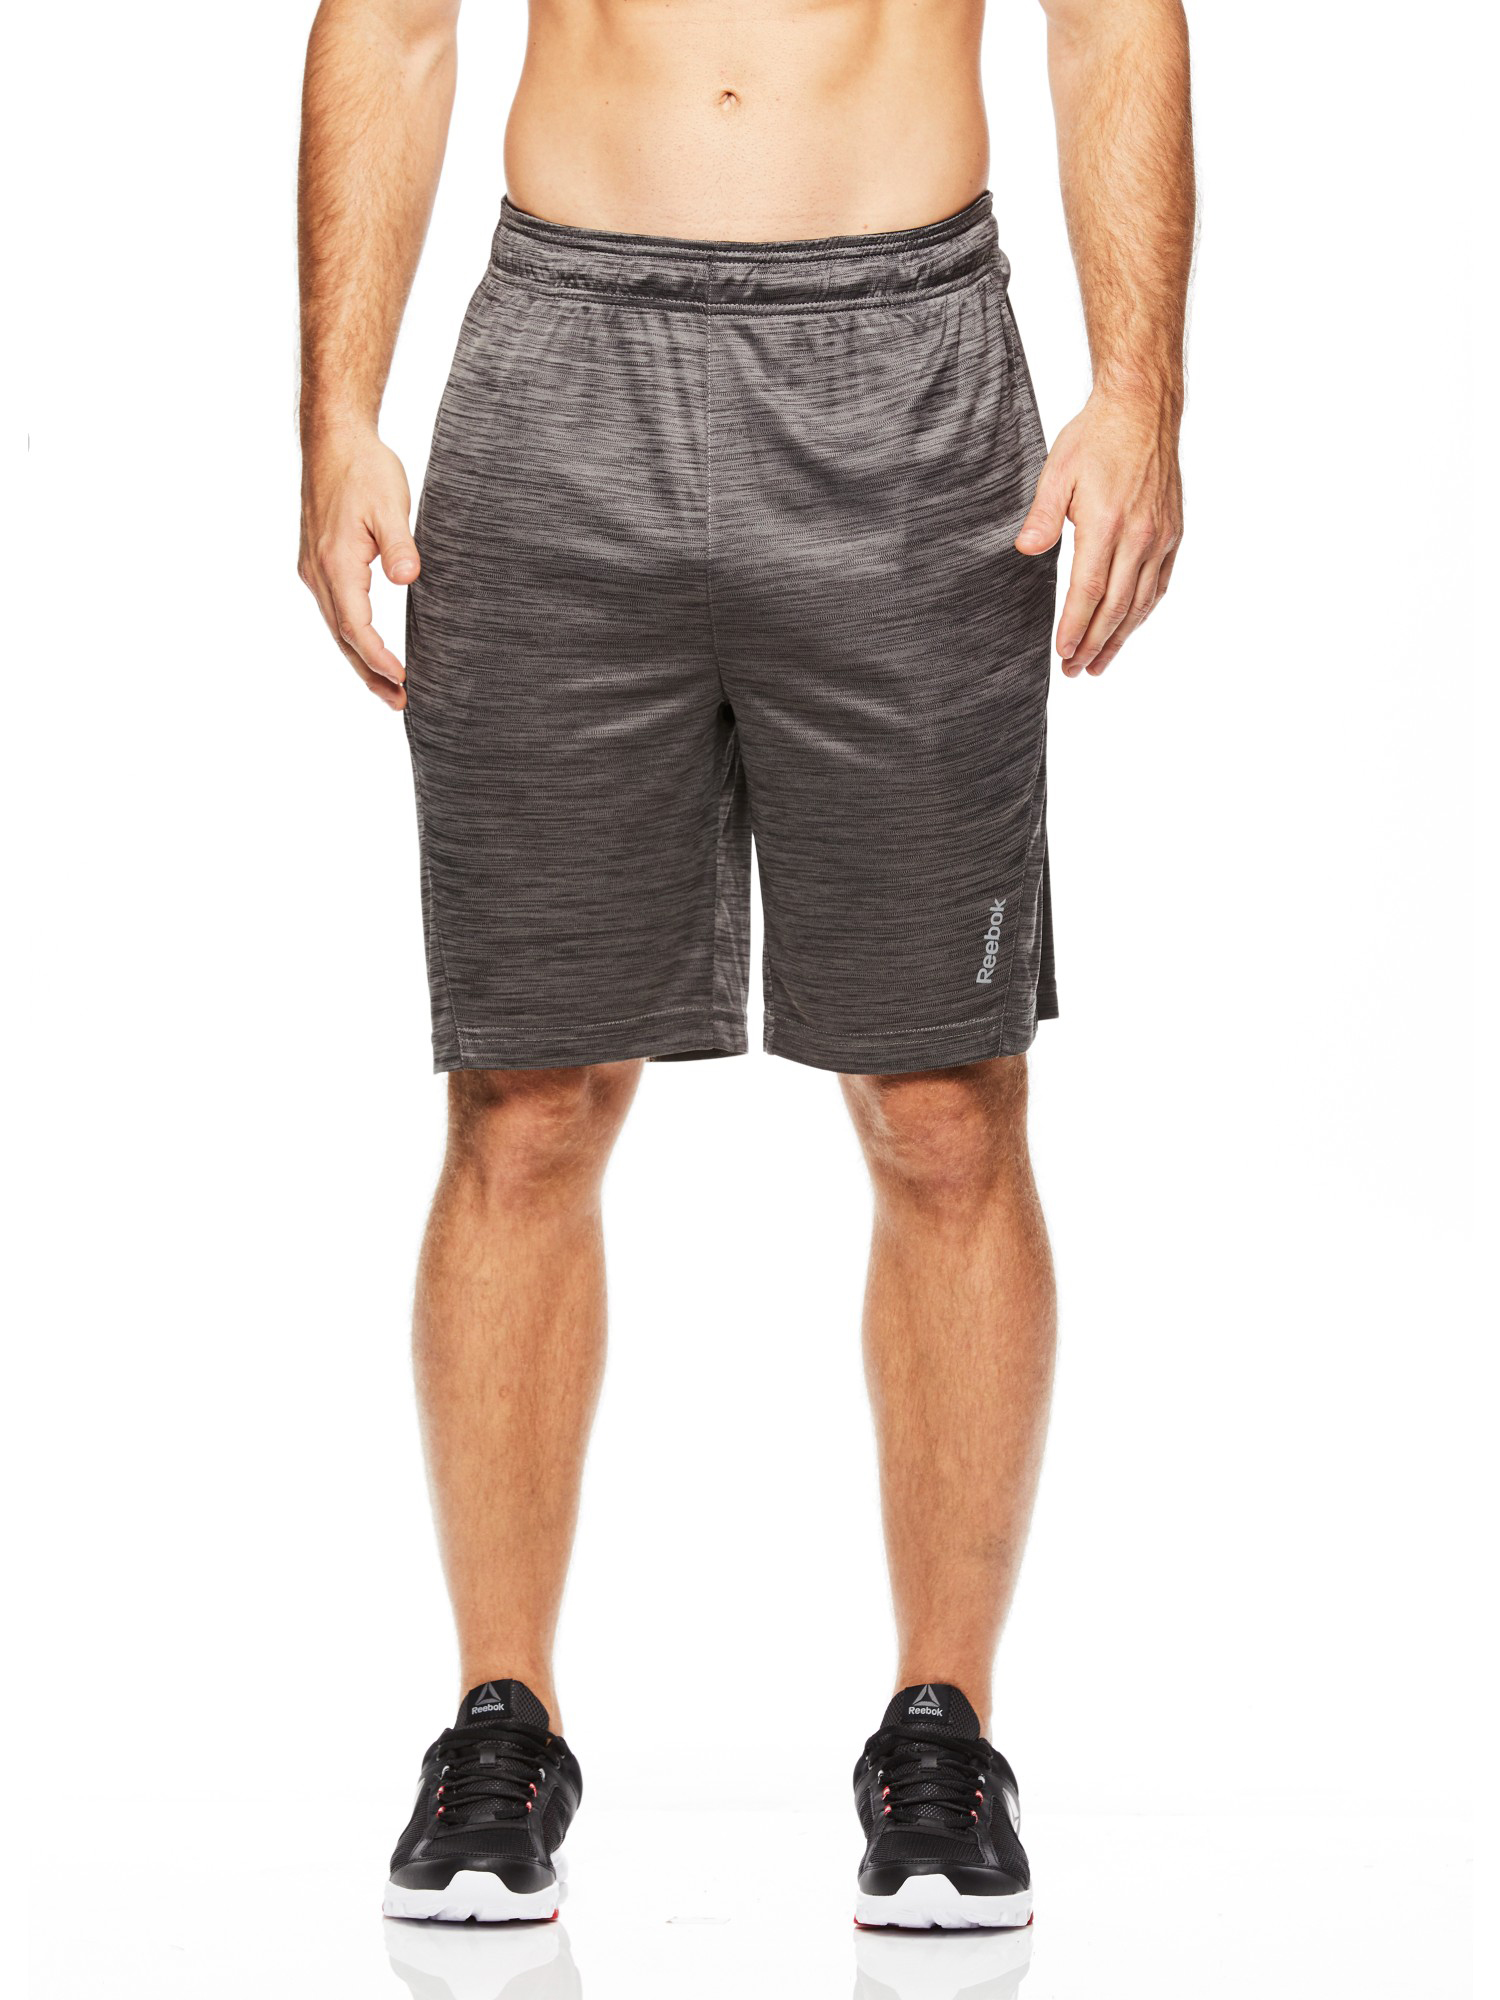 Reebok Men's 9" Cruz Athletic Shorts - image 1 of 4